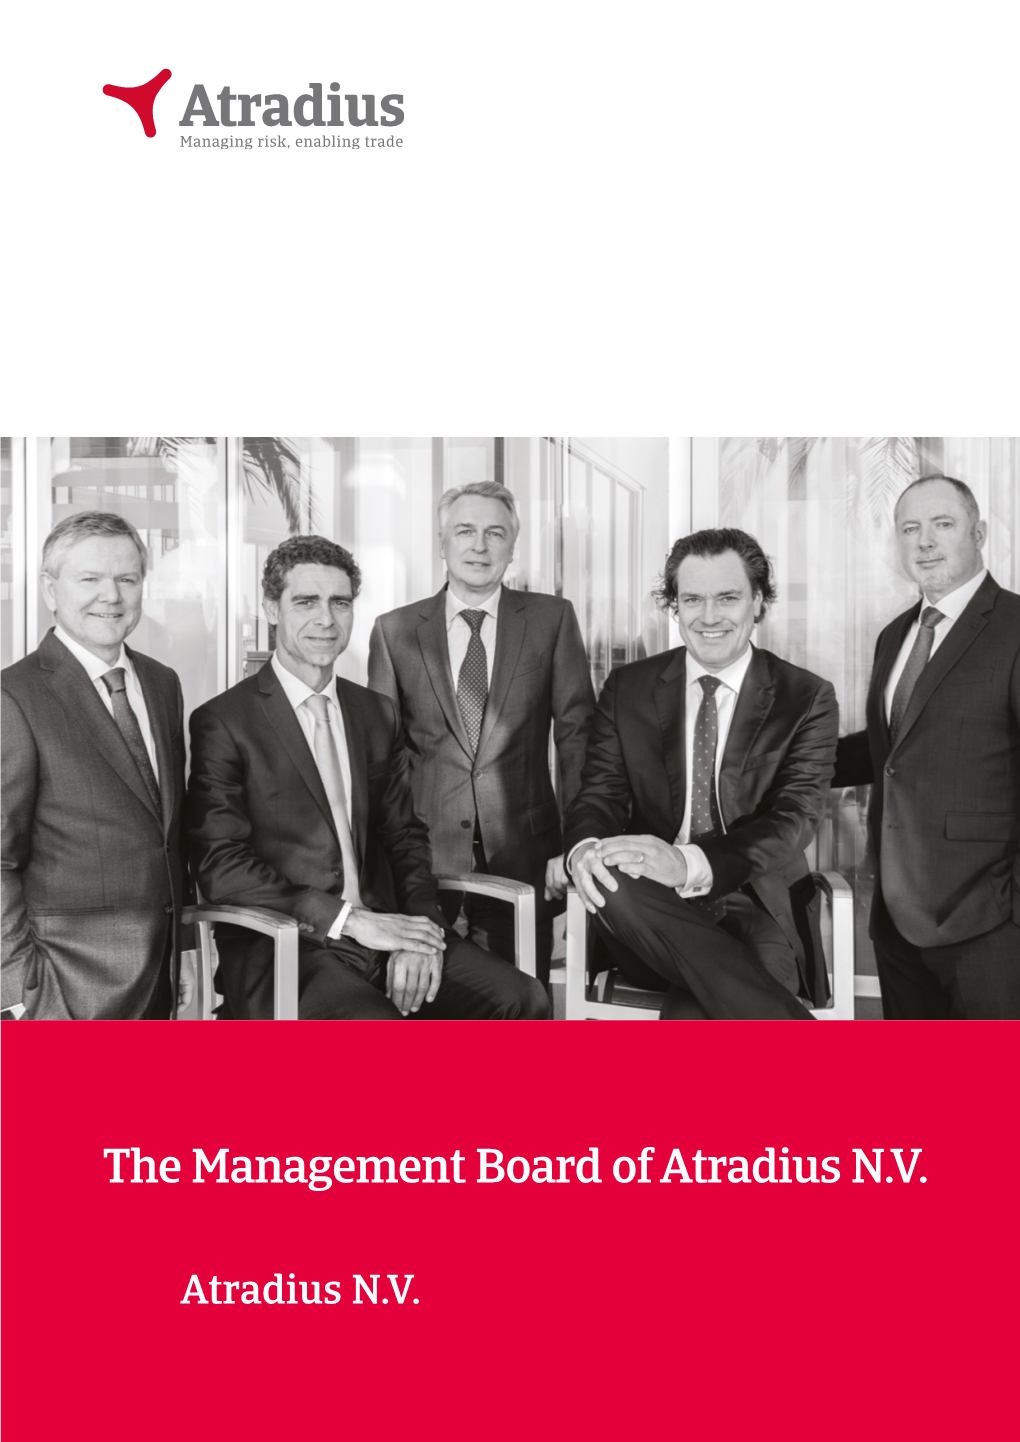 The Management Board of Atradius N.V